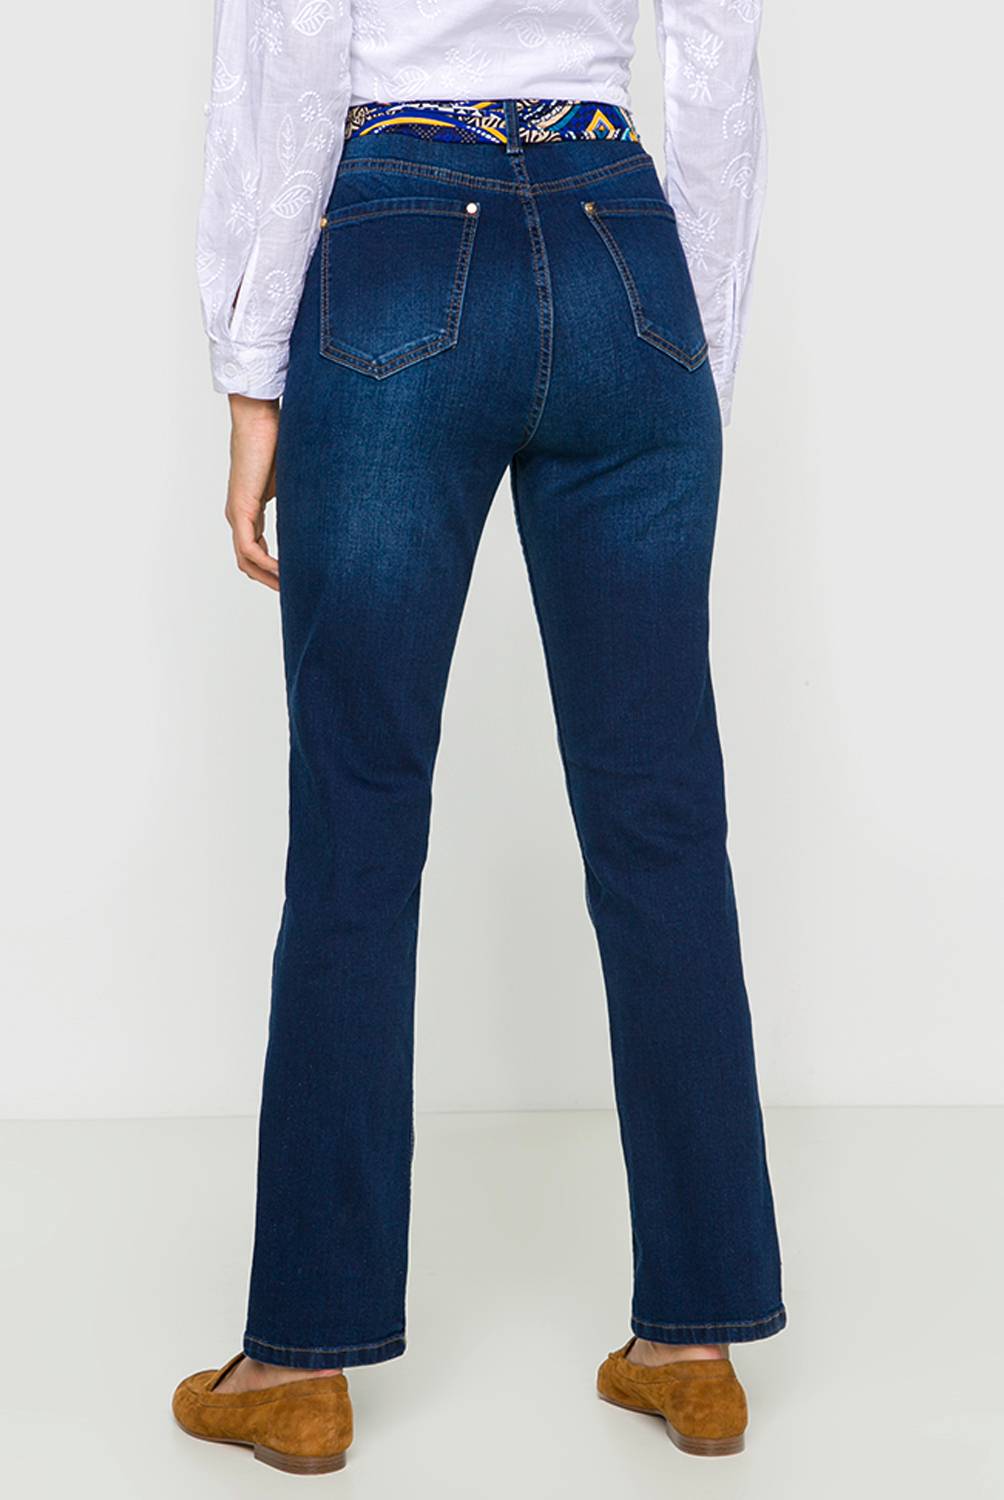 NEWPORT - Jeans Denim Recto Tiro Medio Mujer